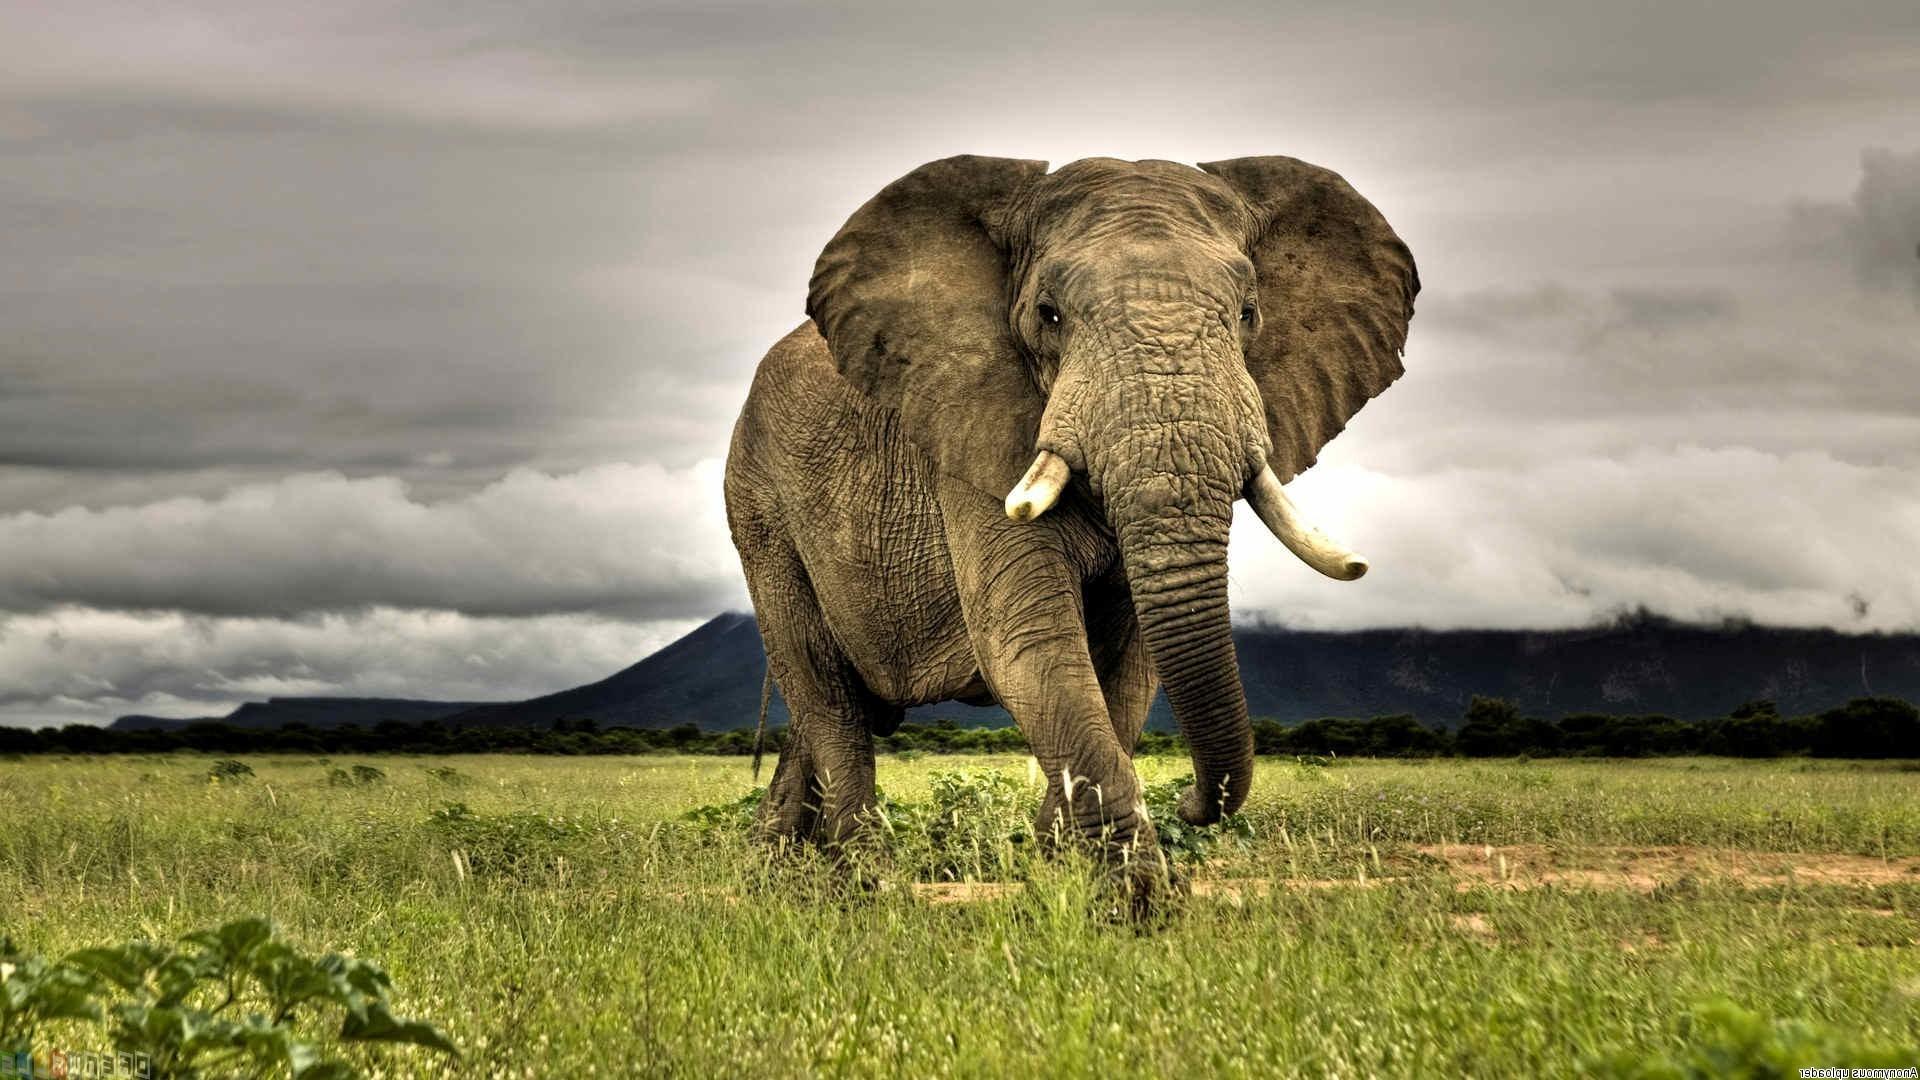 elephants, Animals, African, Nature, Grass, Savannah